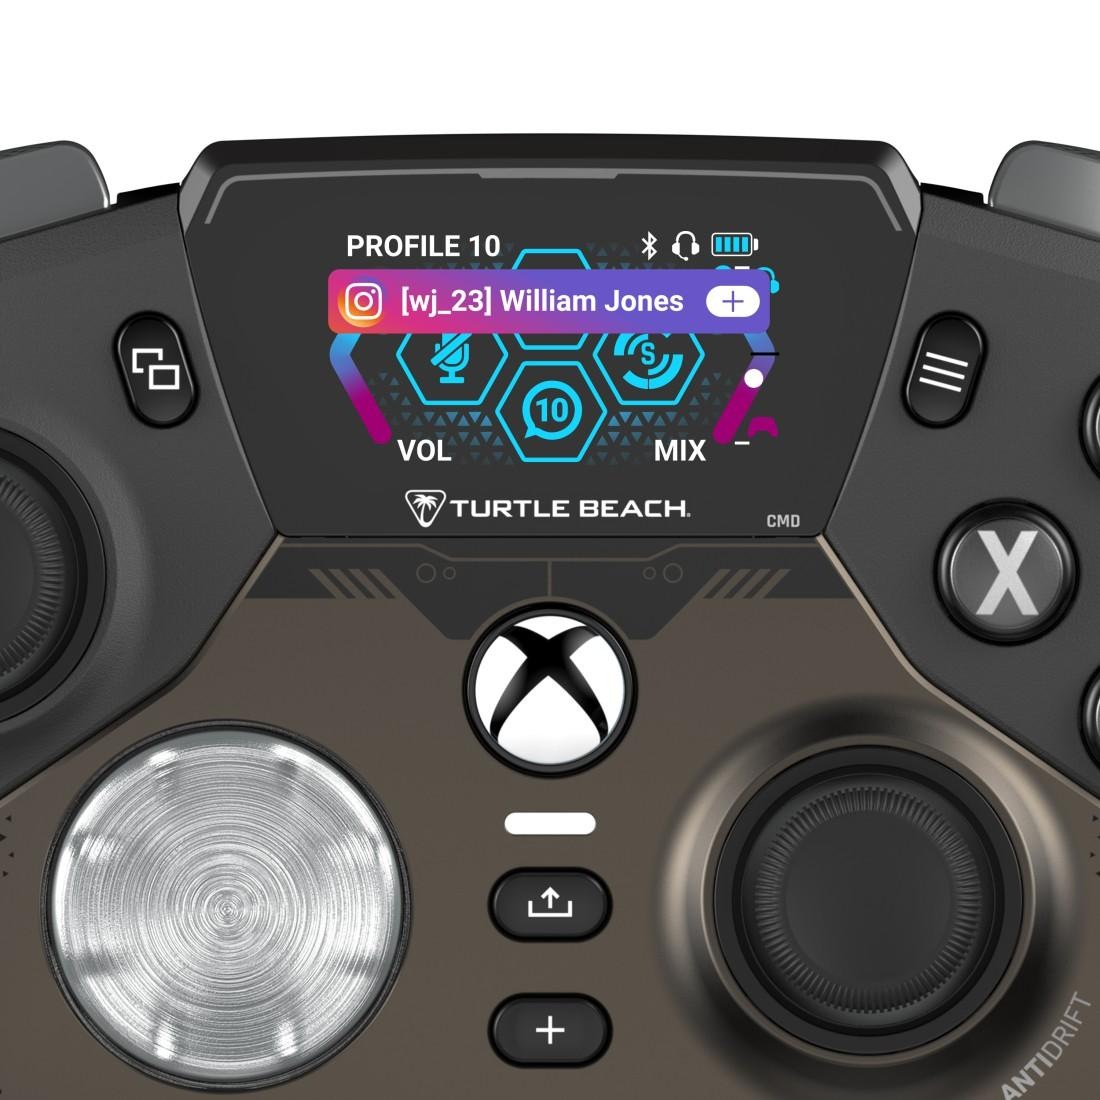 Turtle Beach Controller »Stealth Ultra, für Xbox/PC«